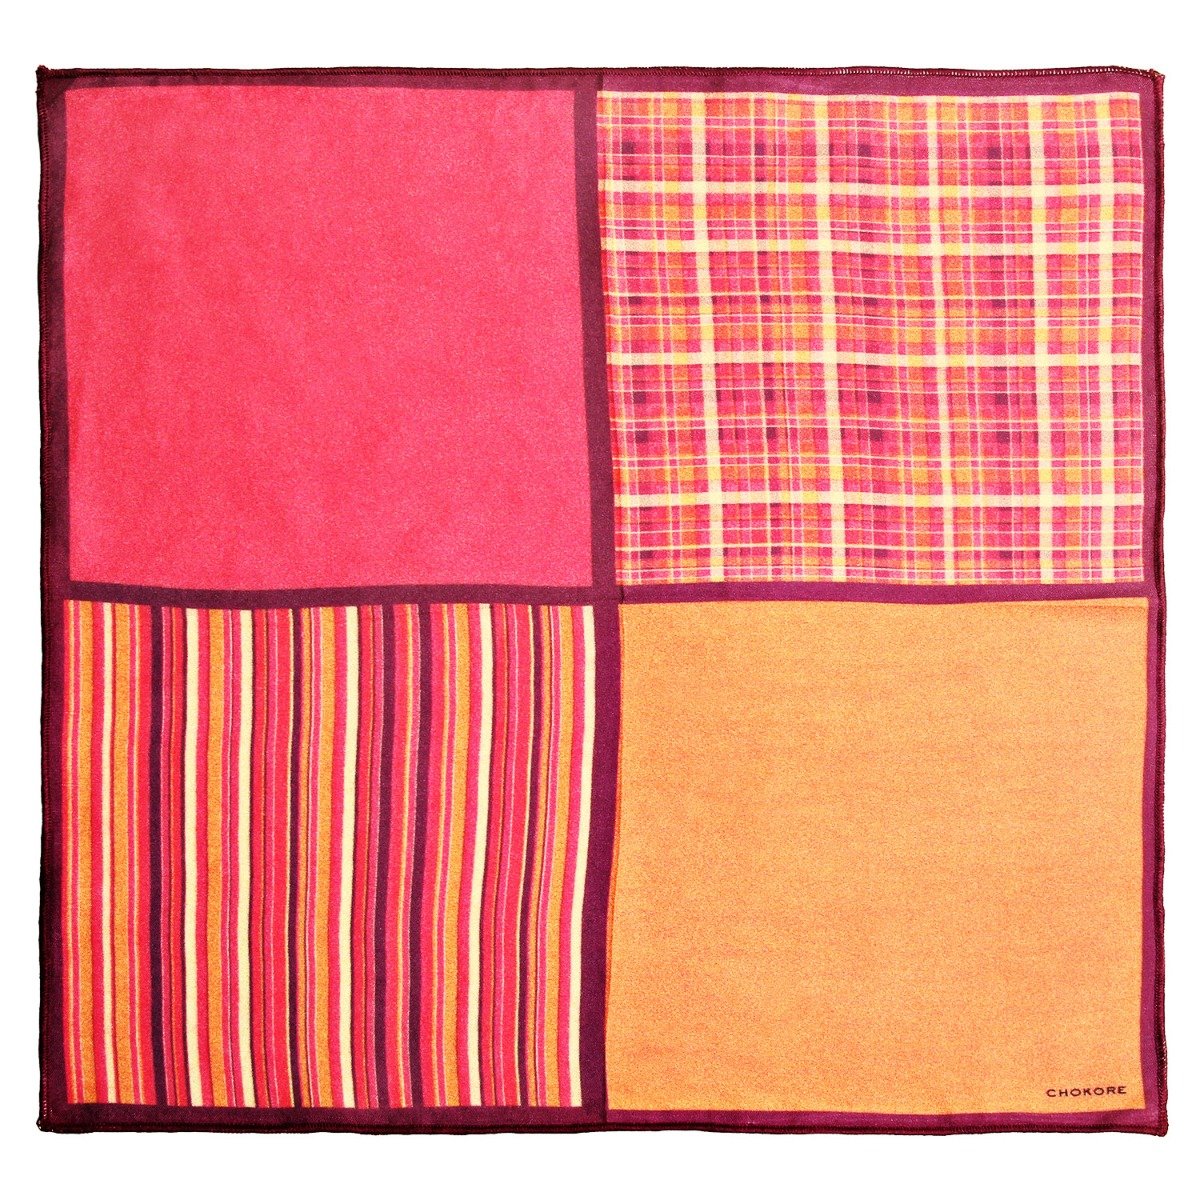 Chokore Four-in-One Pink & Orange Silk Pocket Square